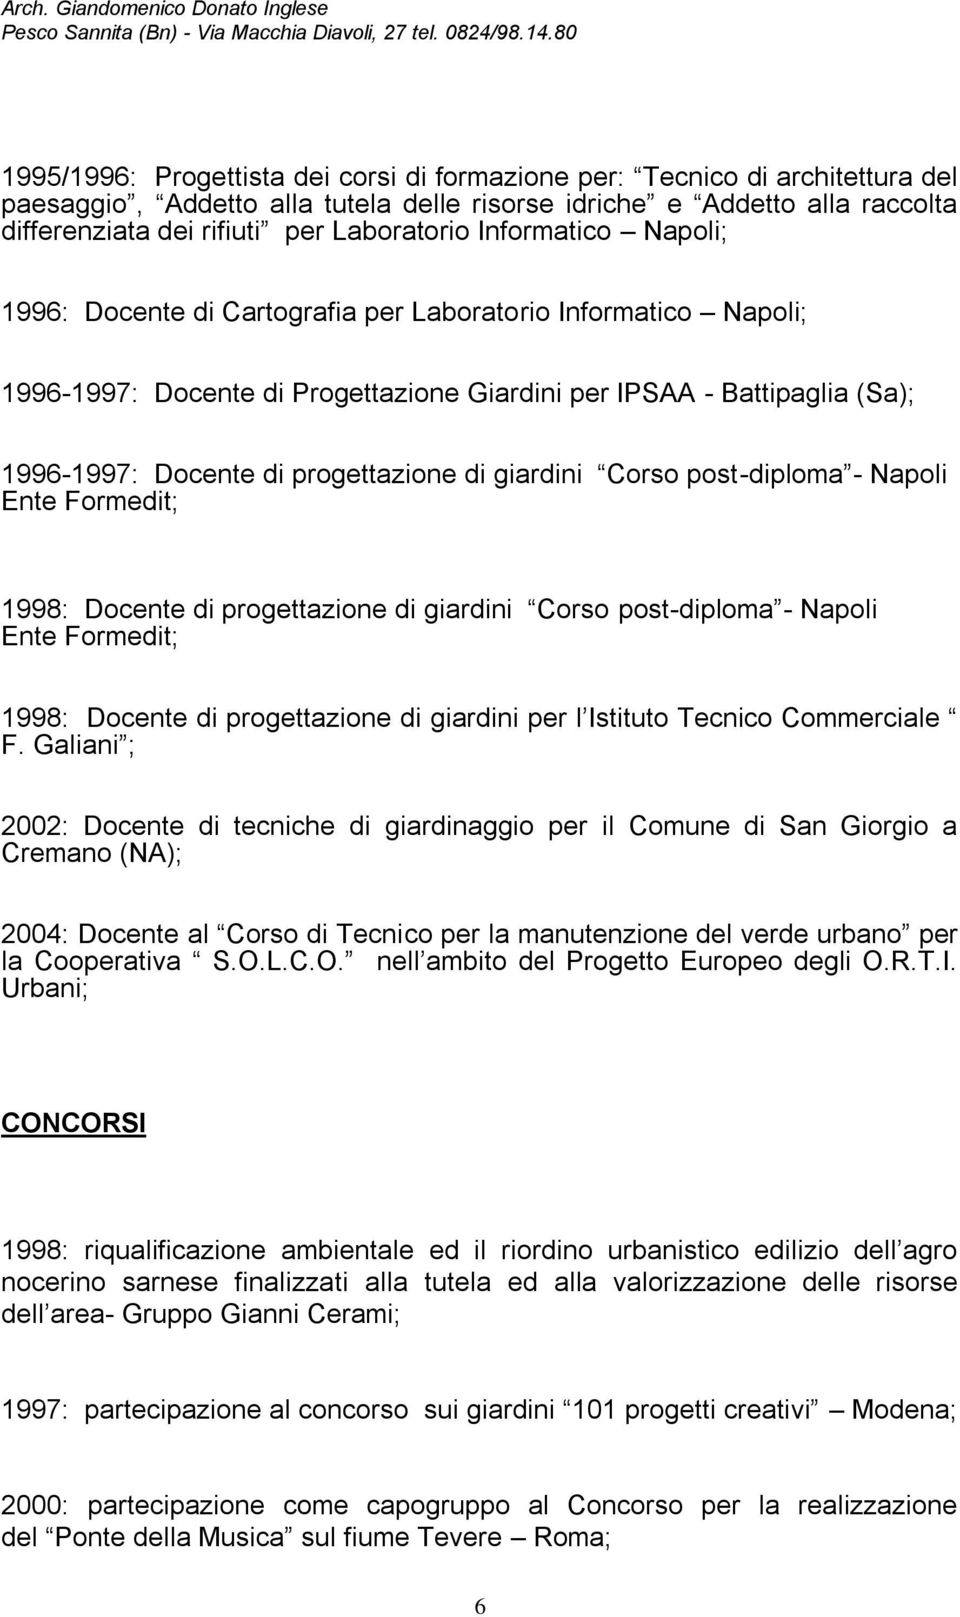 giardini Corso post-diploma - Napoli Ente Formedit; 1998: Docente di progettazione di giardini Corso post-diploma - Napoli Ente Formedit; 1998: Docente di progettazione di giardini per l Istituto